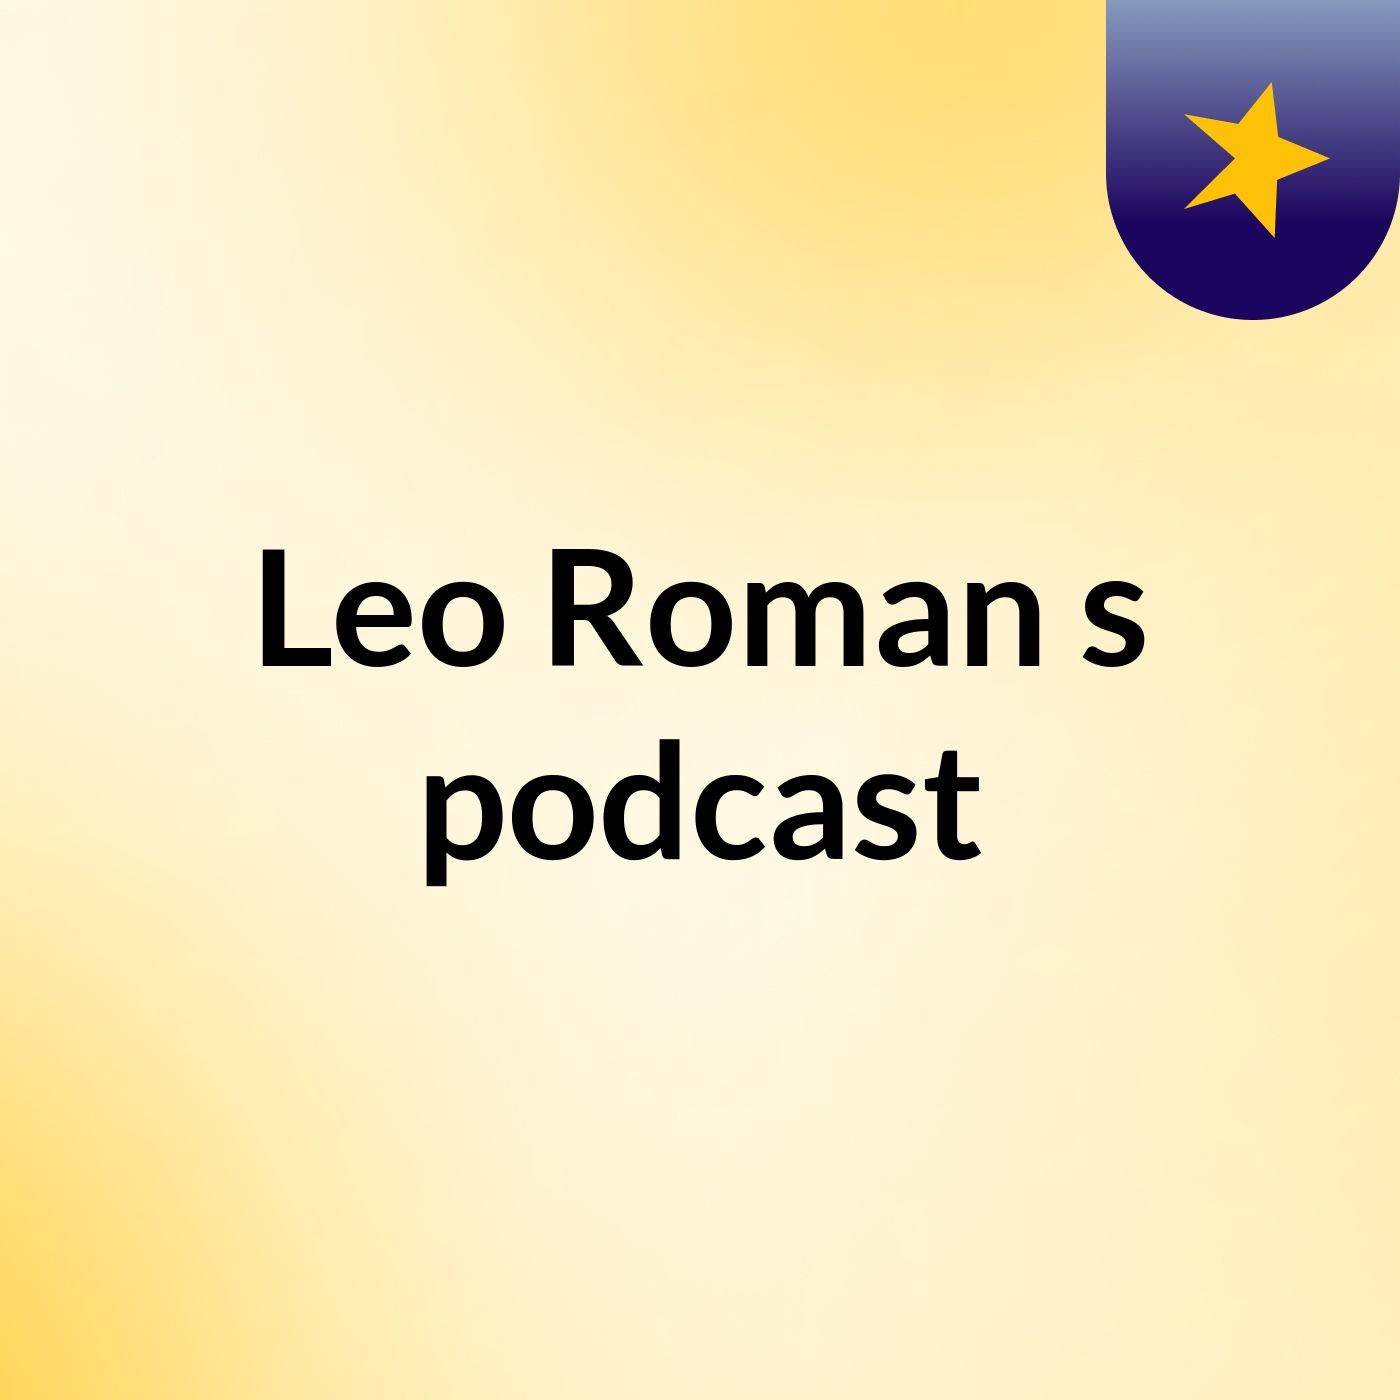 Episode 8 - Leo Roman's podcast